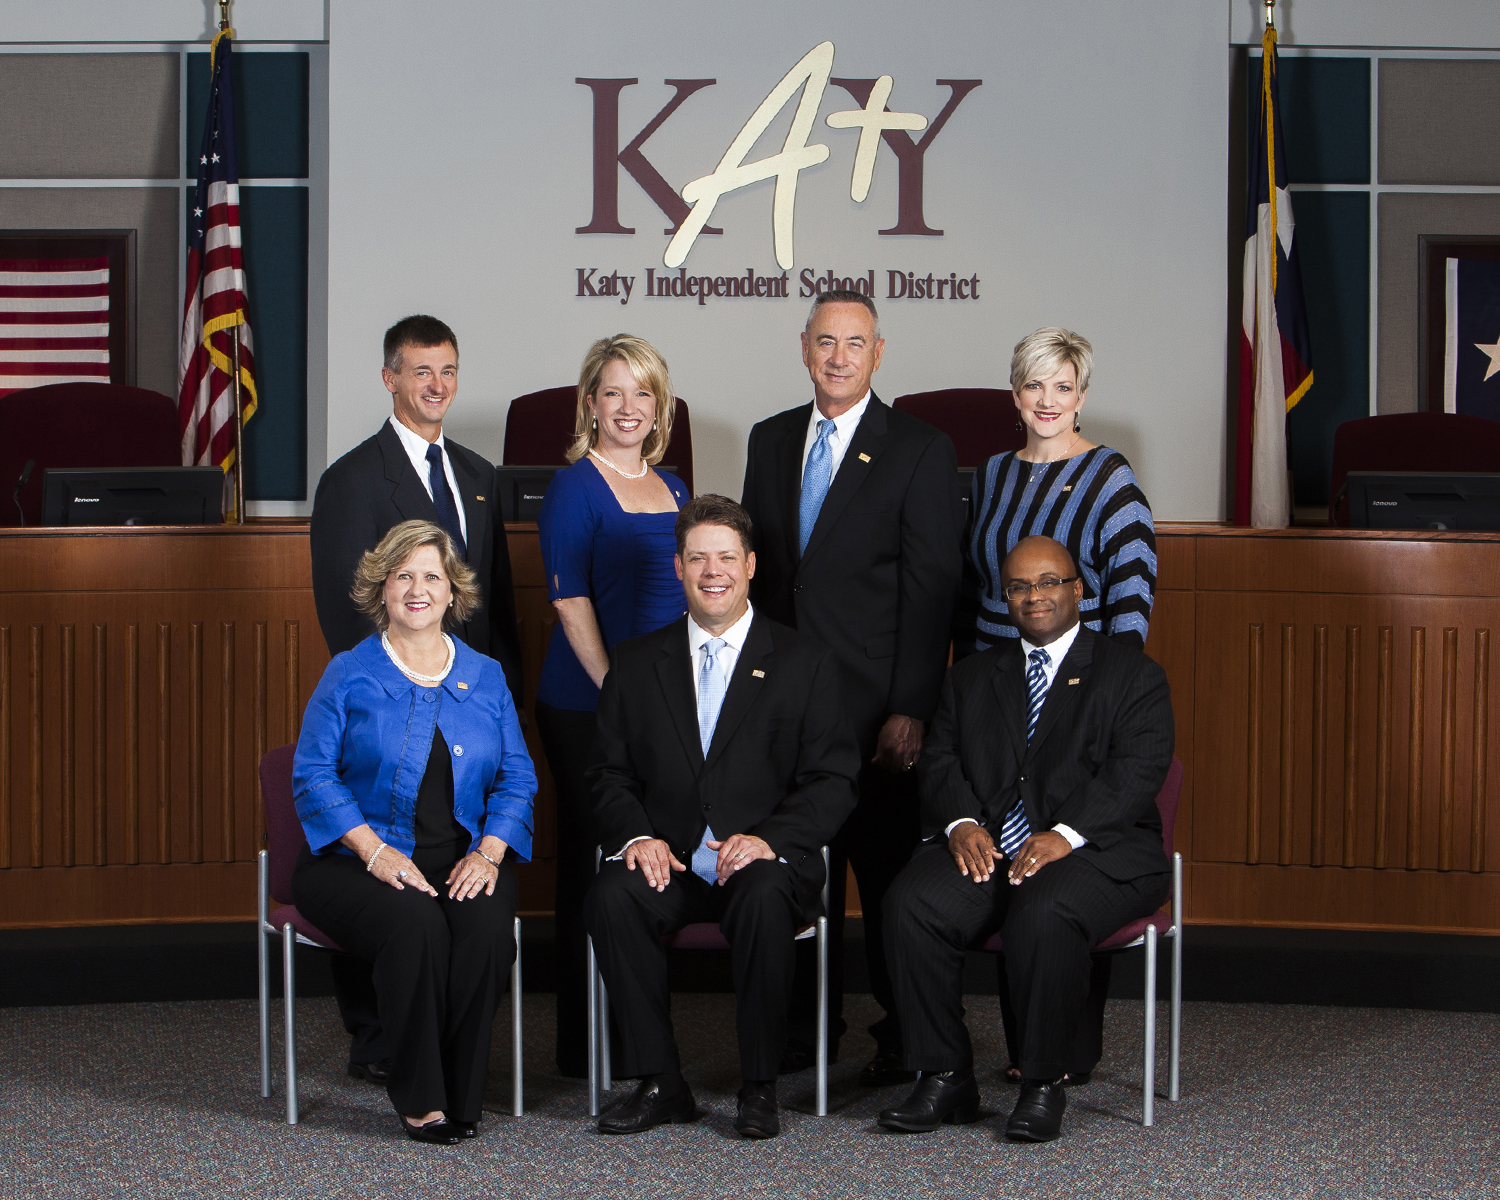 KM_14_Katy ISD Board of TrusteesGroup 4x5 Large - Katy Texas